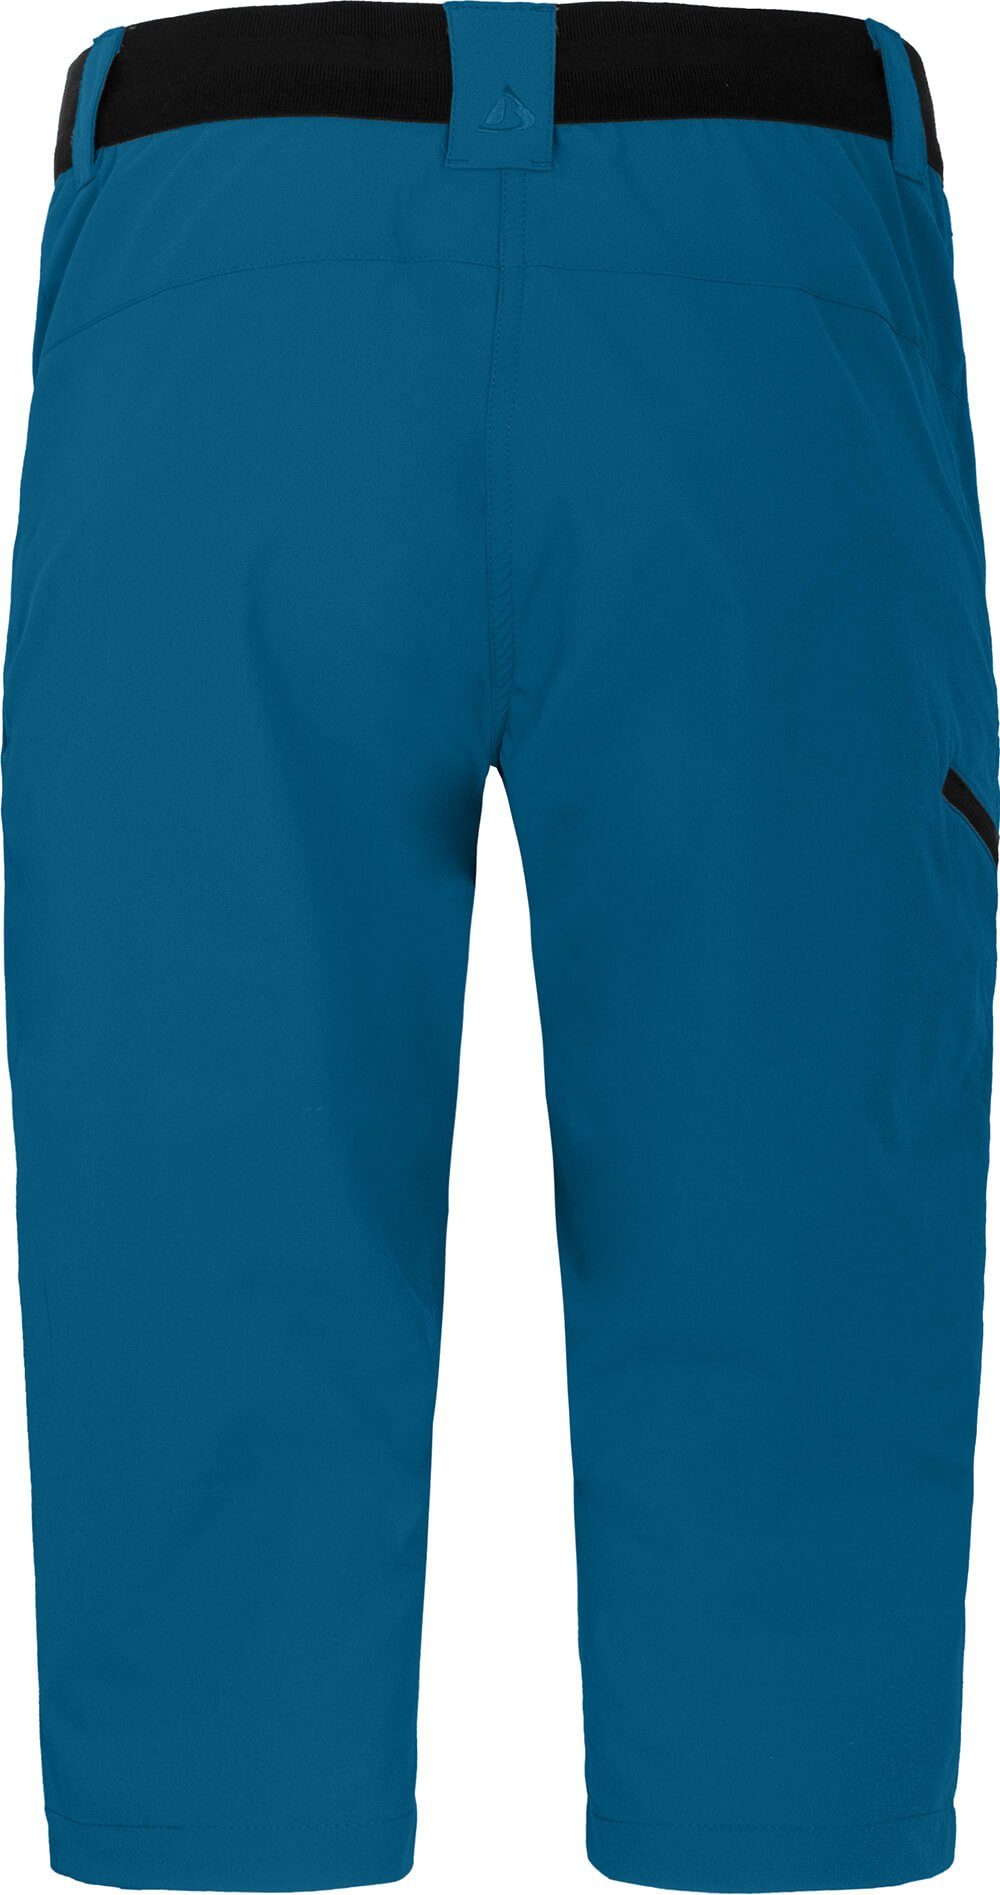 VIDAA COMFORT leicht, Outdoorhose Wanderhose, 3/4 Capri Saphir strapazierfähig, Bergson Damen Normalgrößen, blau